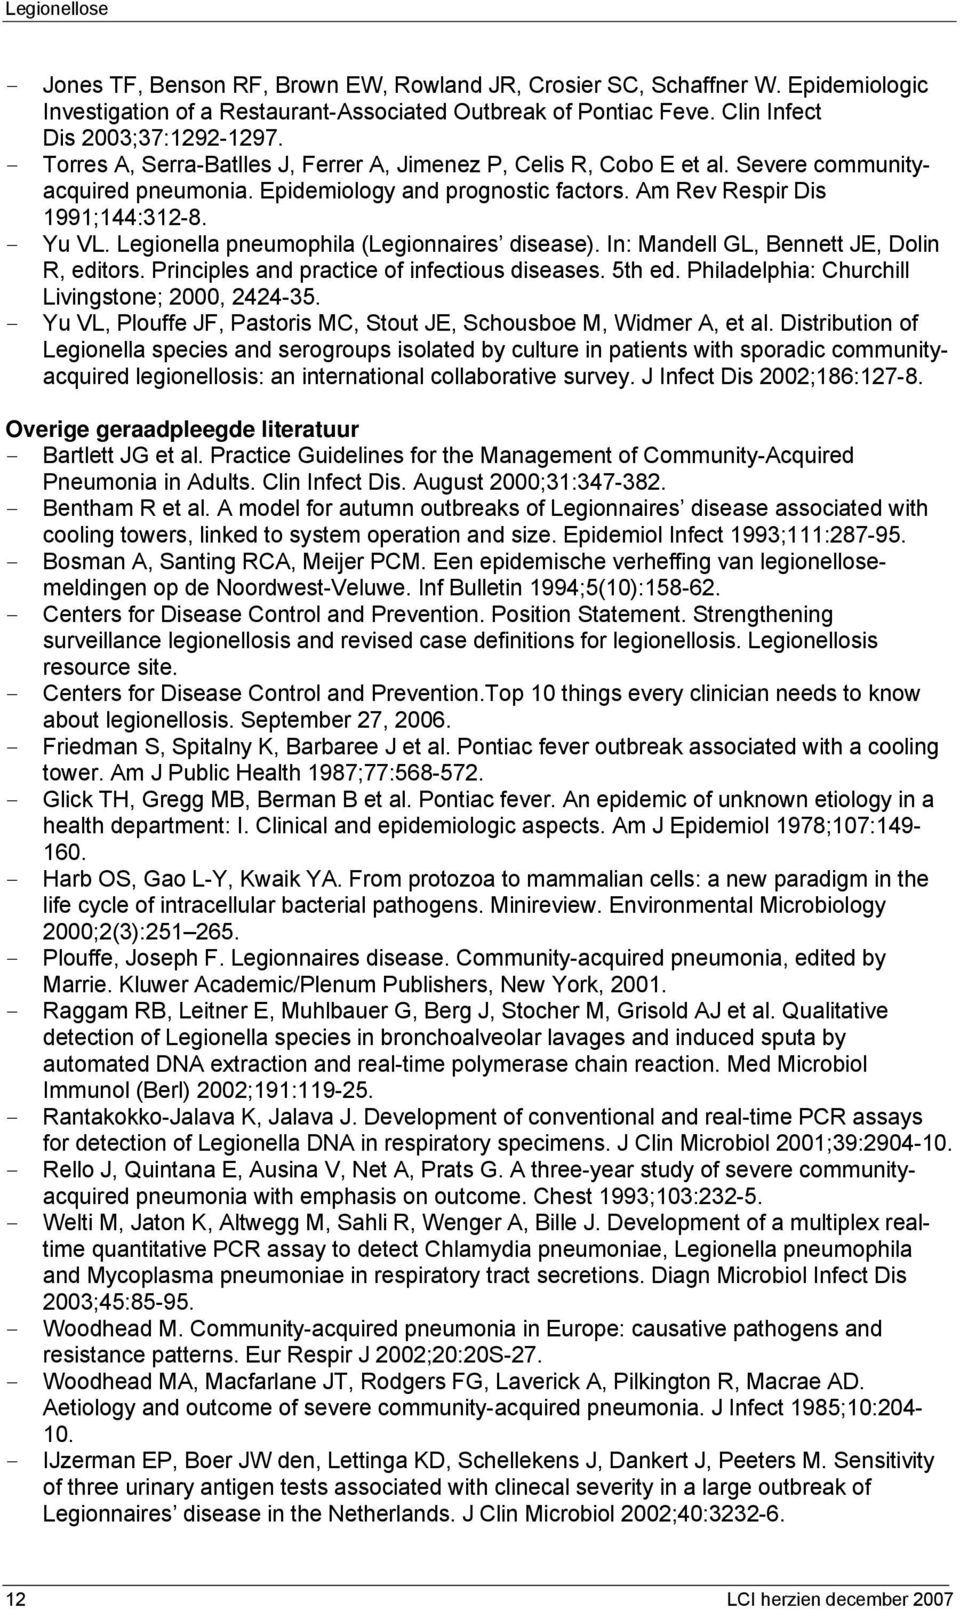 Legionella pneumophila (Legionnaires disease). In: Mandell GL, Bennett JE, Dolin R, editors. Principles and practice of infectious diseases. 5th ed. Philadelphia: Churchill Livingstone; 2000, 2424-35.